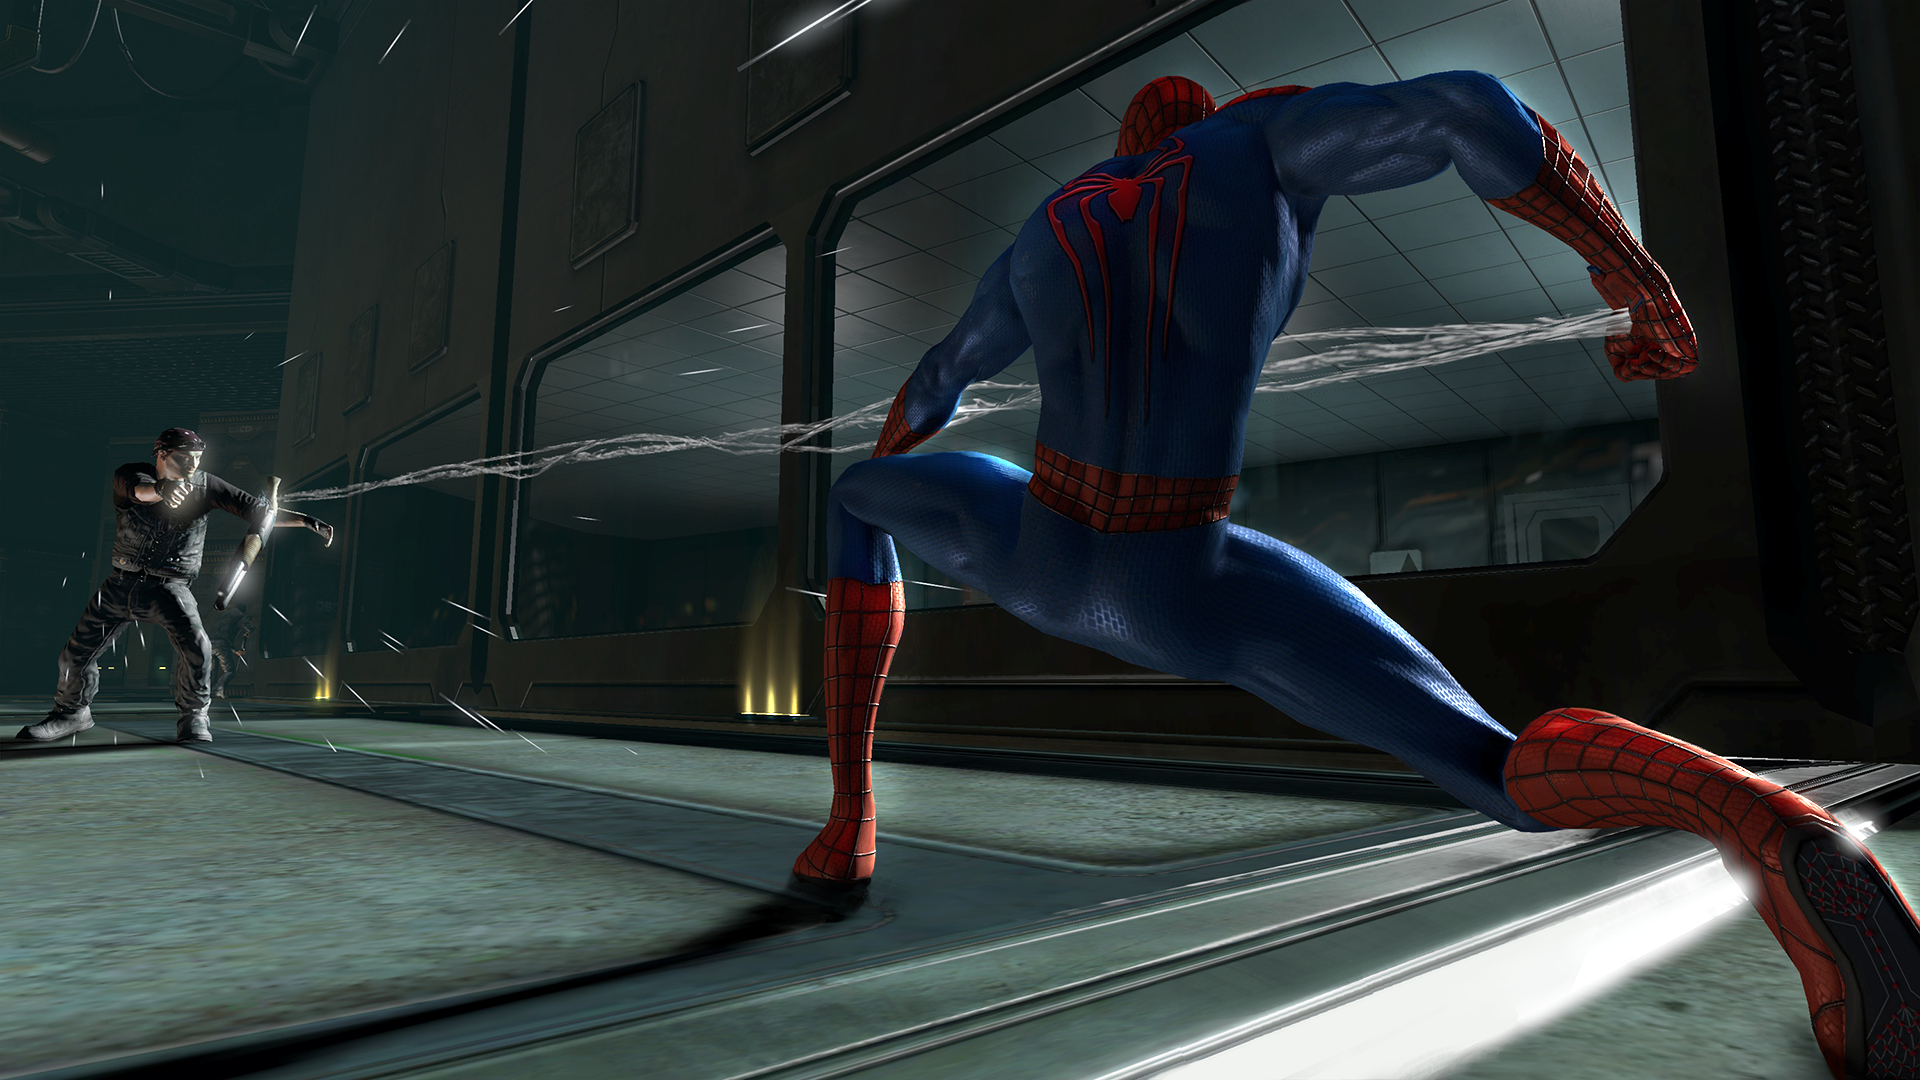 The amazing Spider-man (игра, 2012). Человек паук 2012 года игра. Спайдермен игра 2015. Spider man 2 the game.